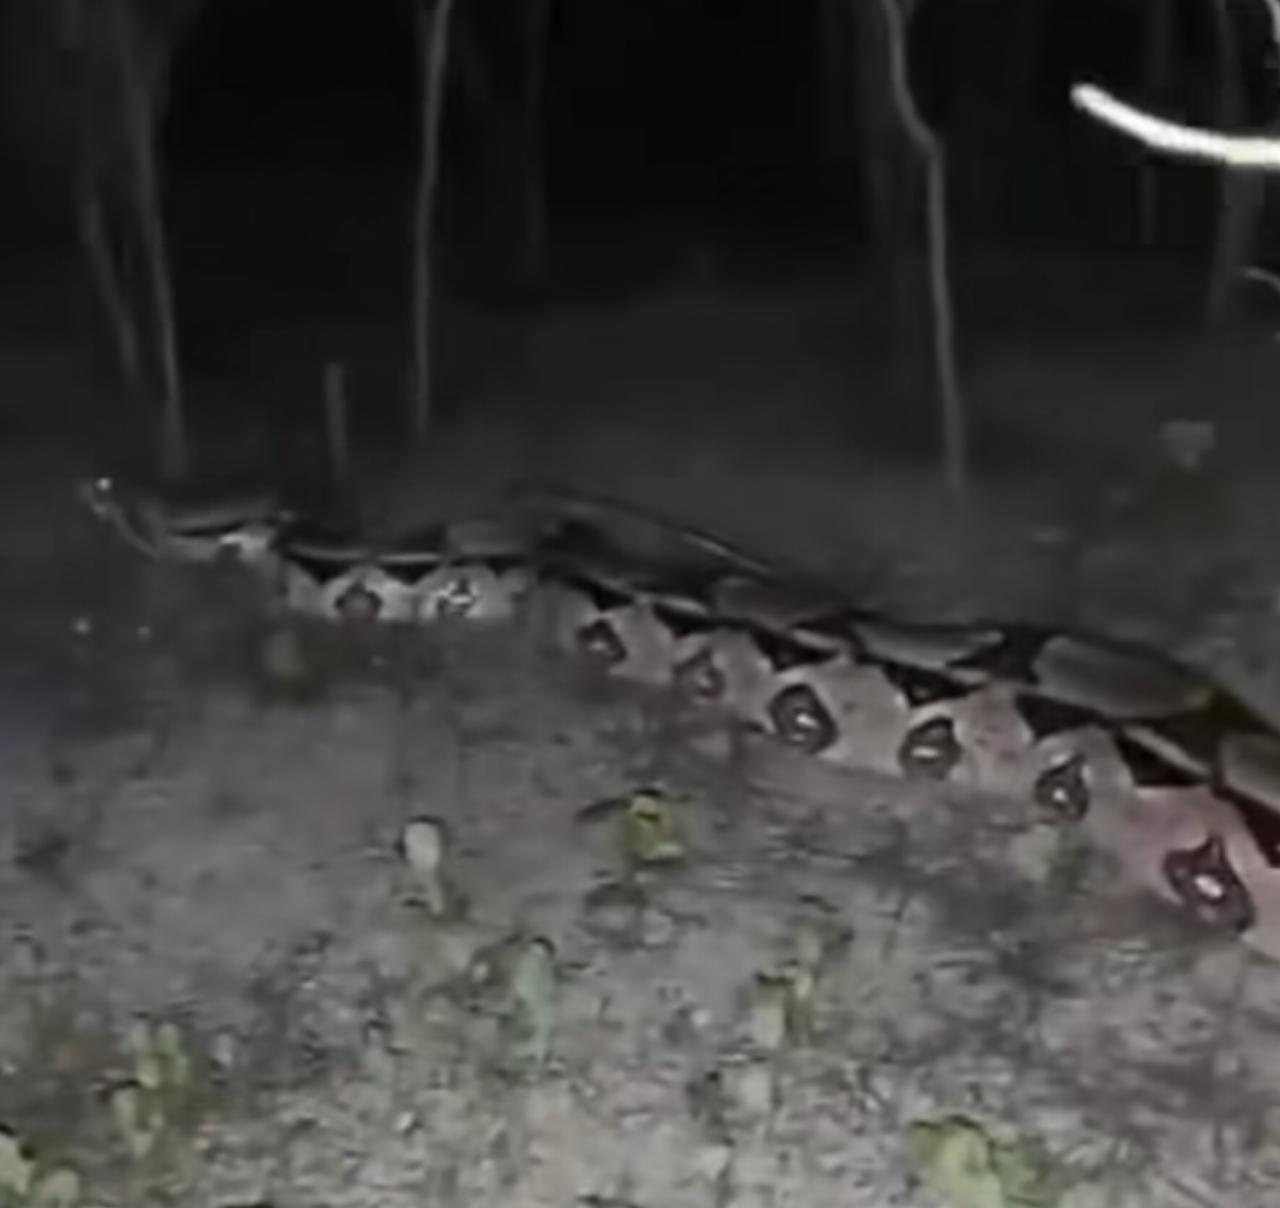 Jiboia de 5 metros? serpente causa espanto e curiosidade